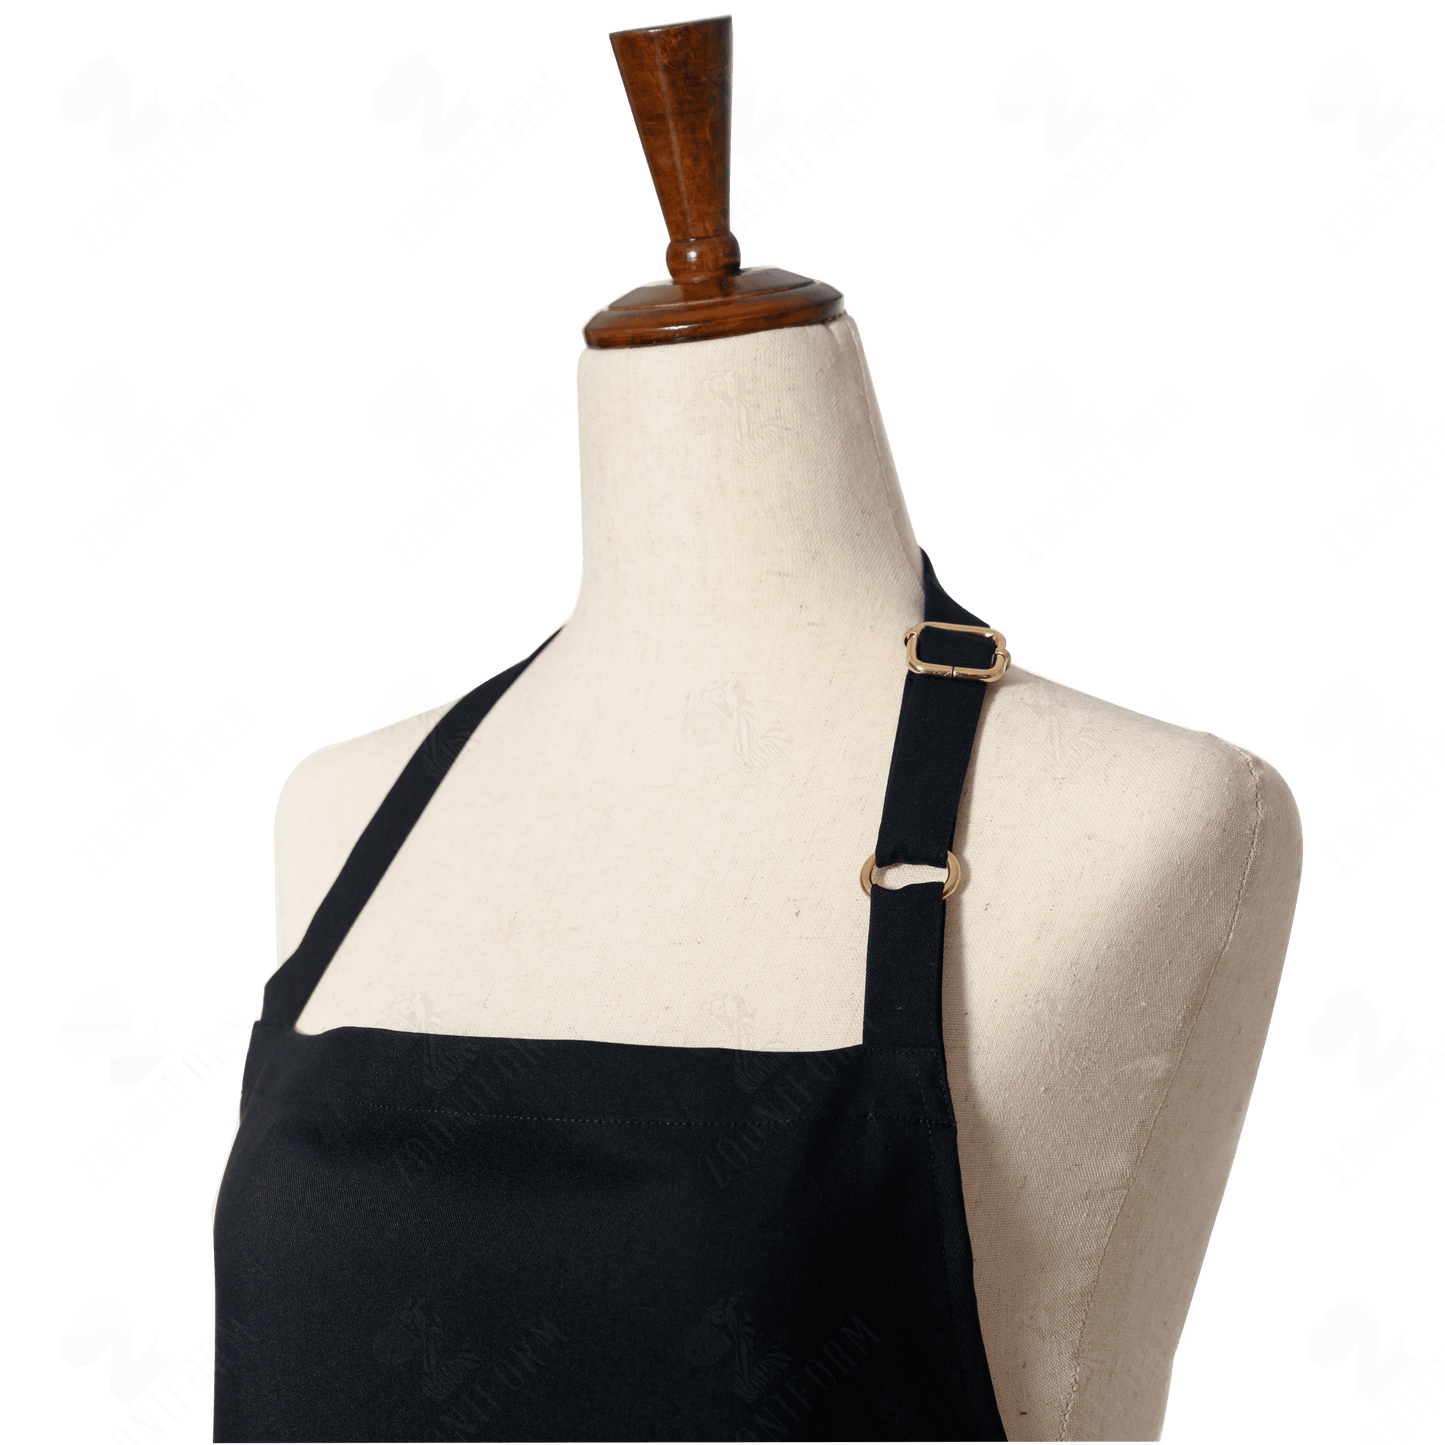 Cotton Black Bib Apron Two Pockets, Adjustable Neck Strap